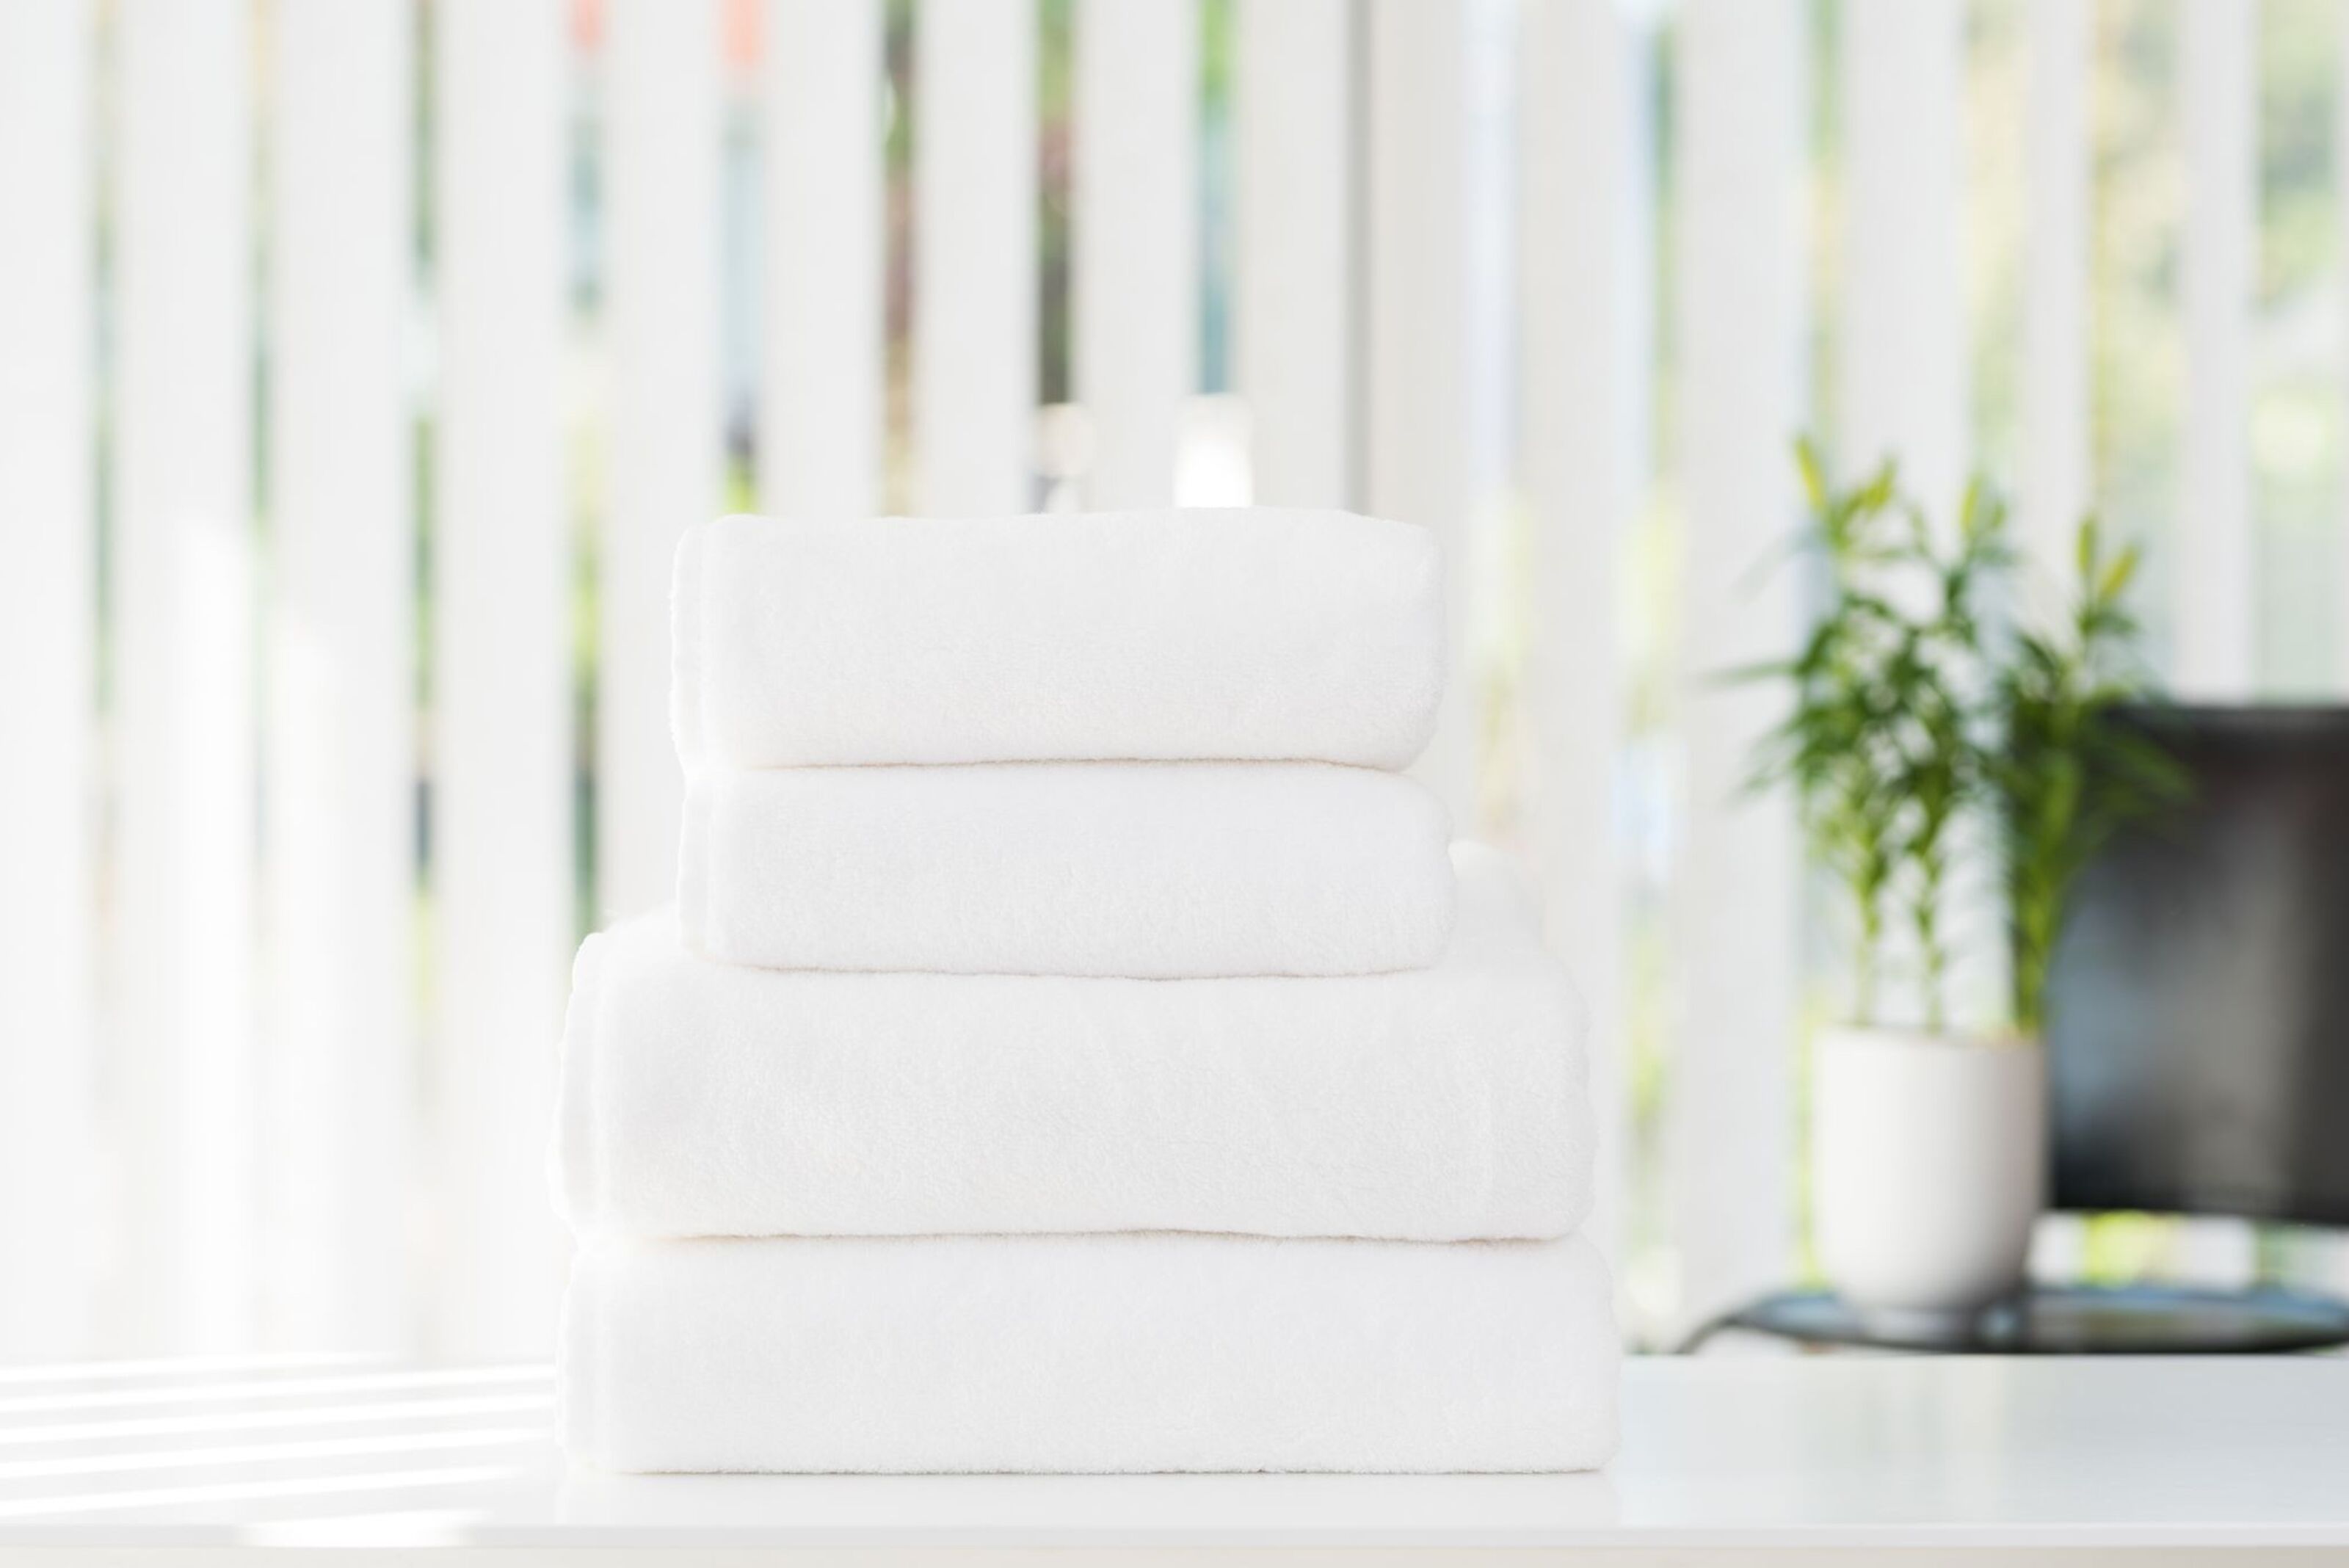 100% Egyptian Cotton  Bath Towels (70x140cm) - White